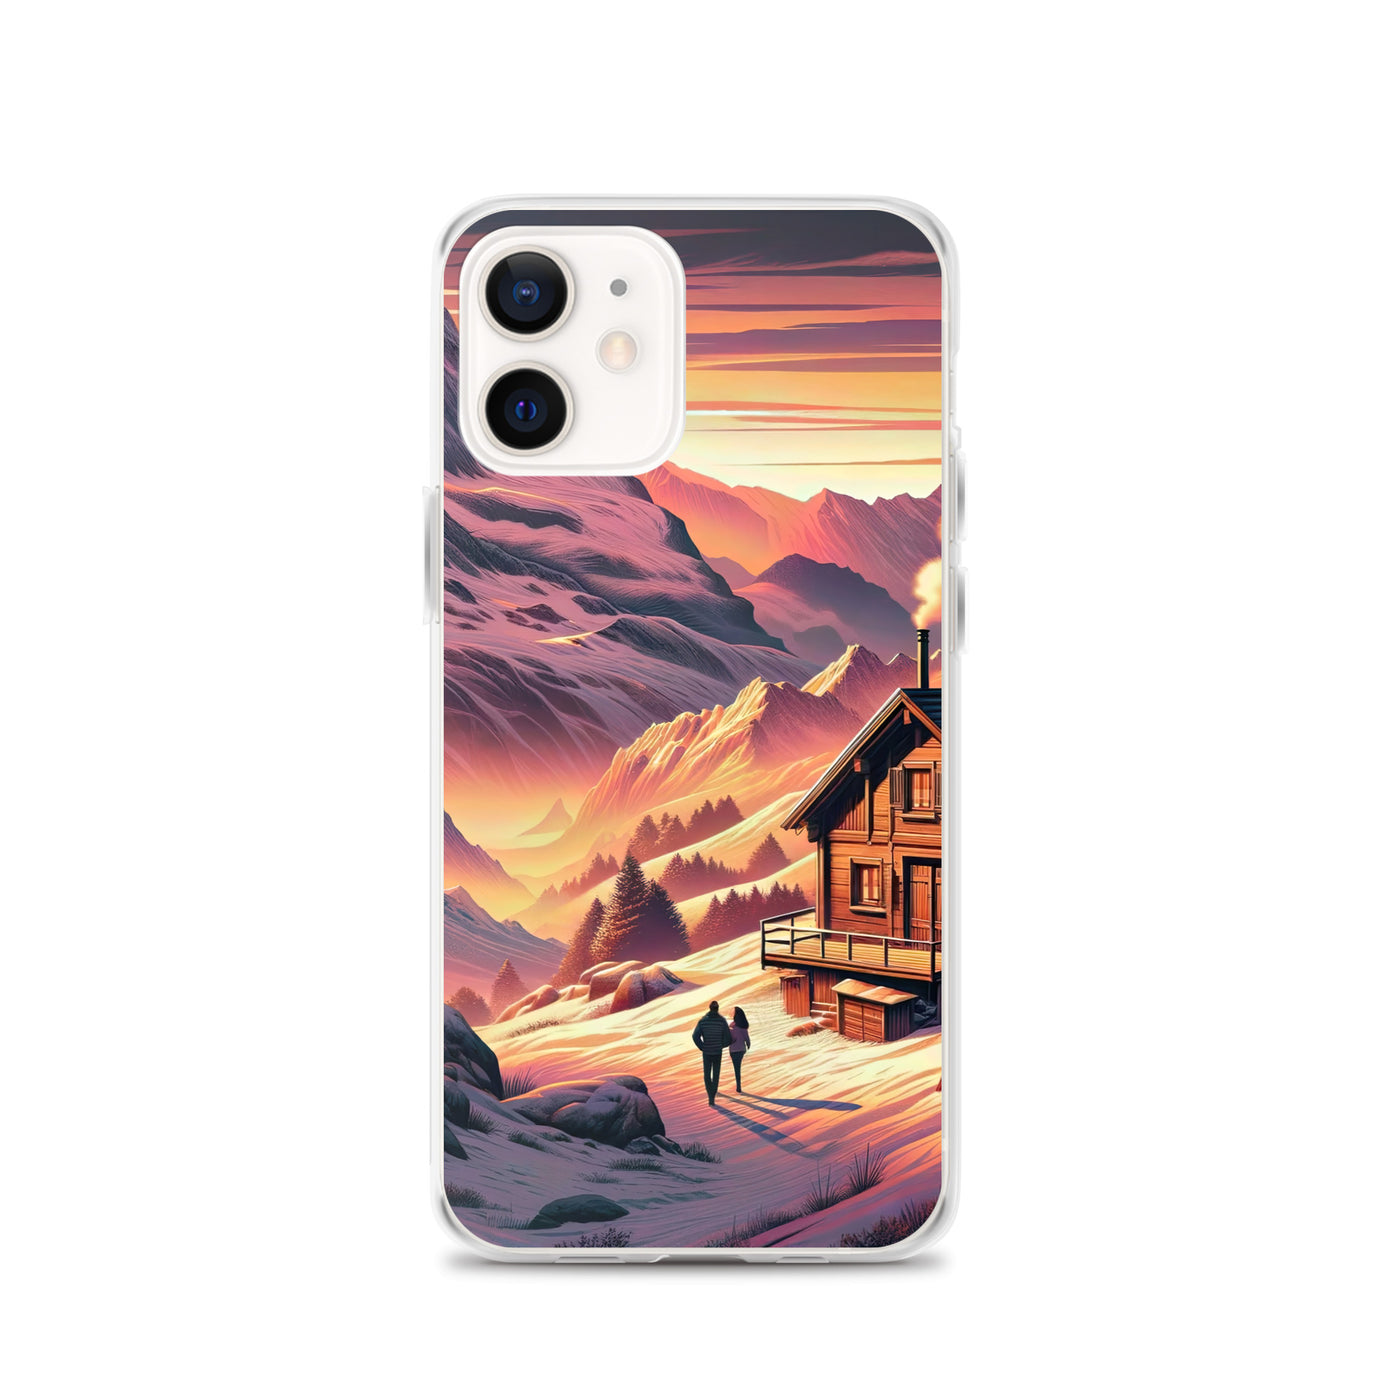 Berghütte im goldenen Sonnenuntergang: Digitale Alpenillustration - iPhone Schutzhülle (durchsichtig) berge xxx yyy zzz iPhone 12